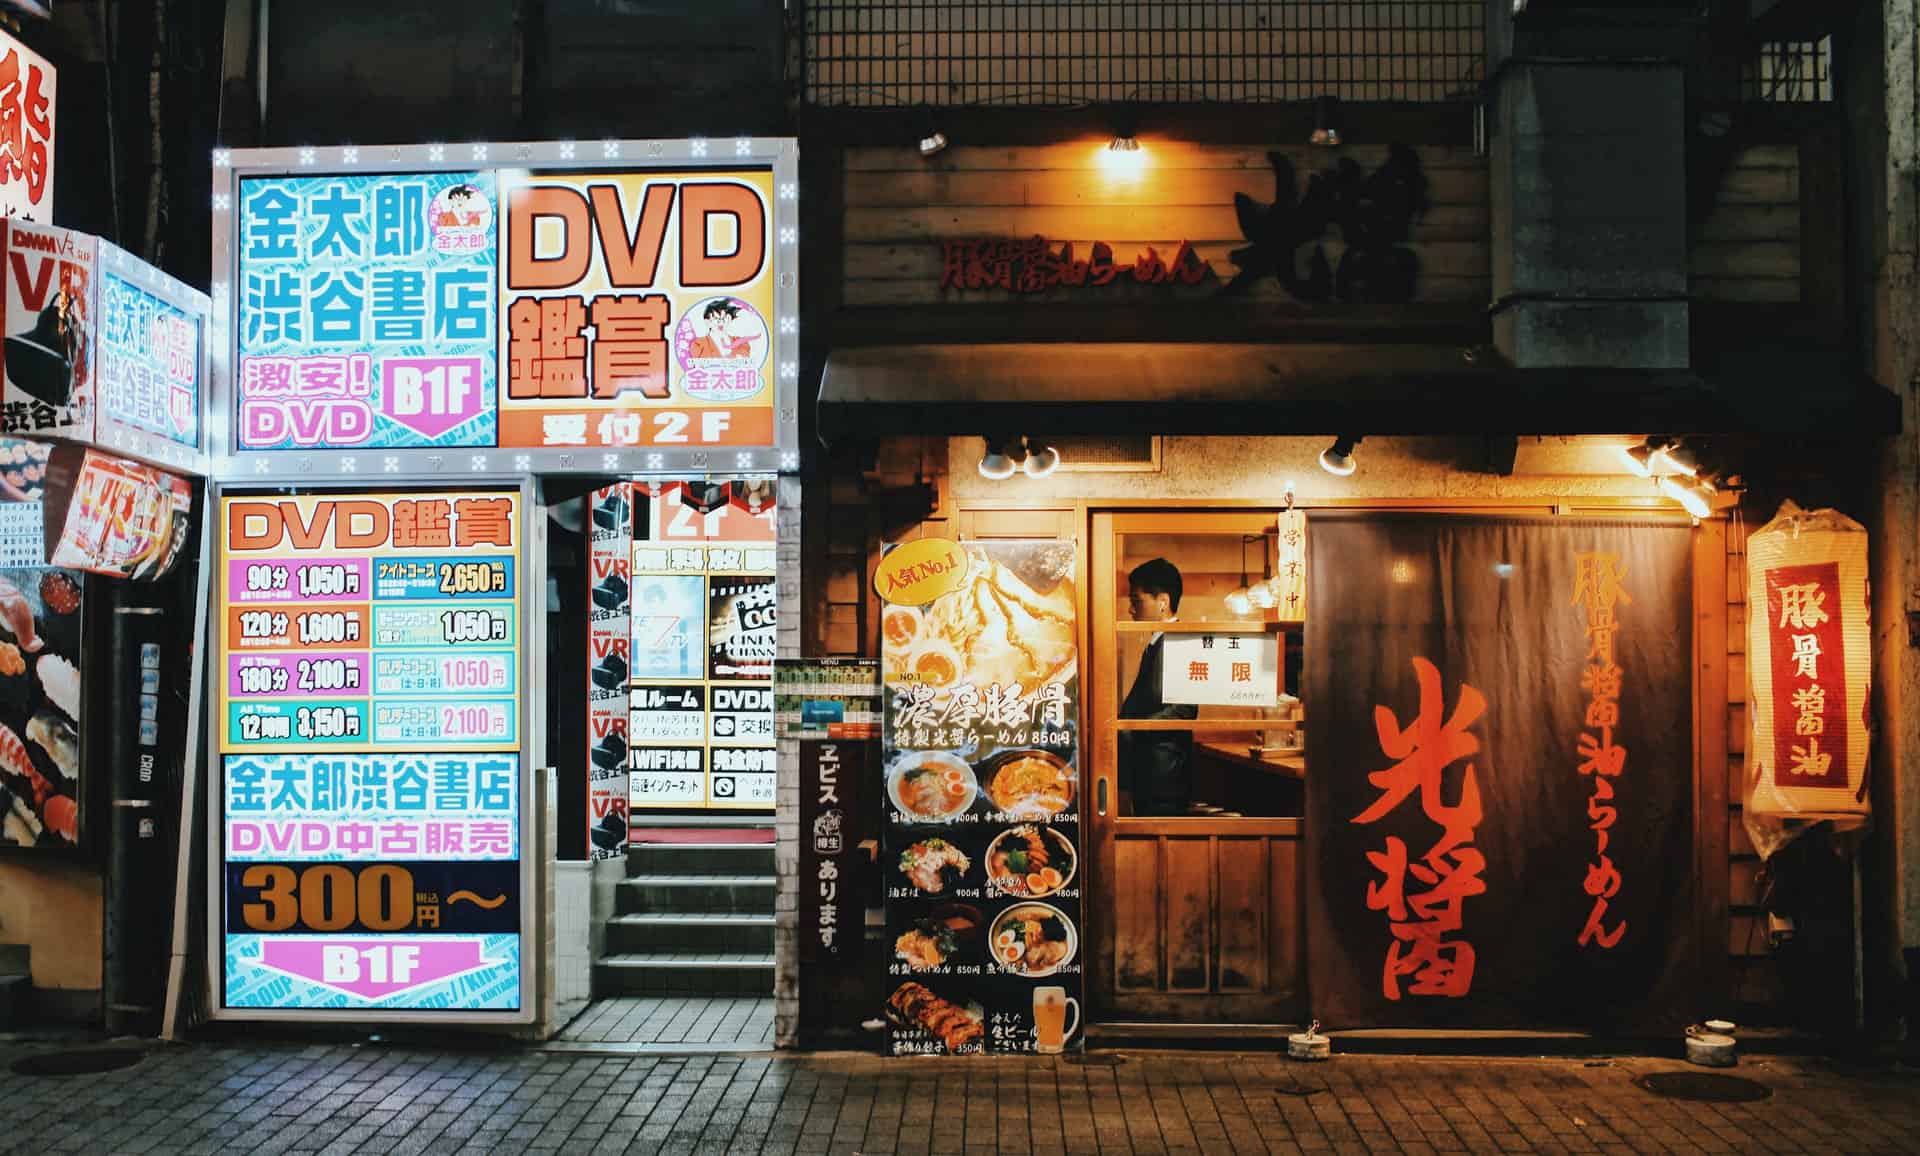 dvd shop in Japan